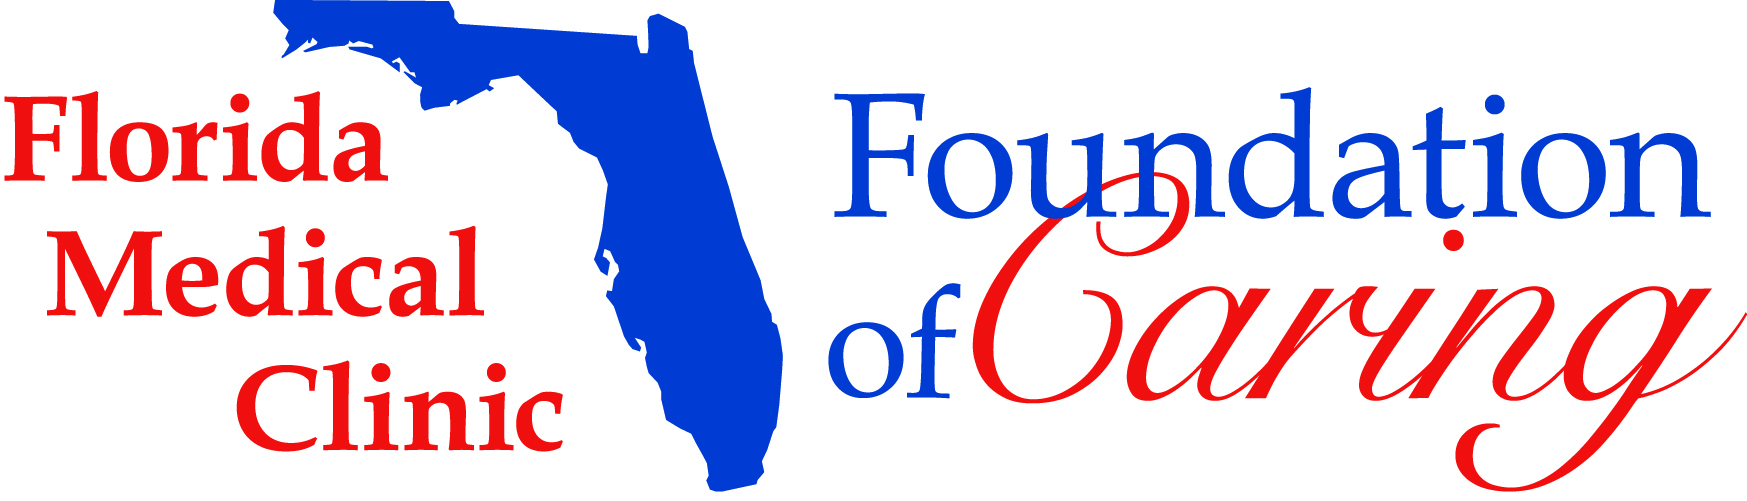 FMC Foundation Of Caring logo